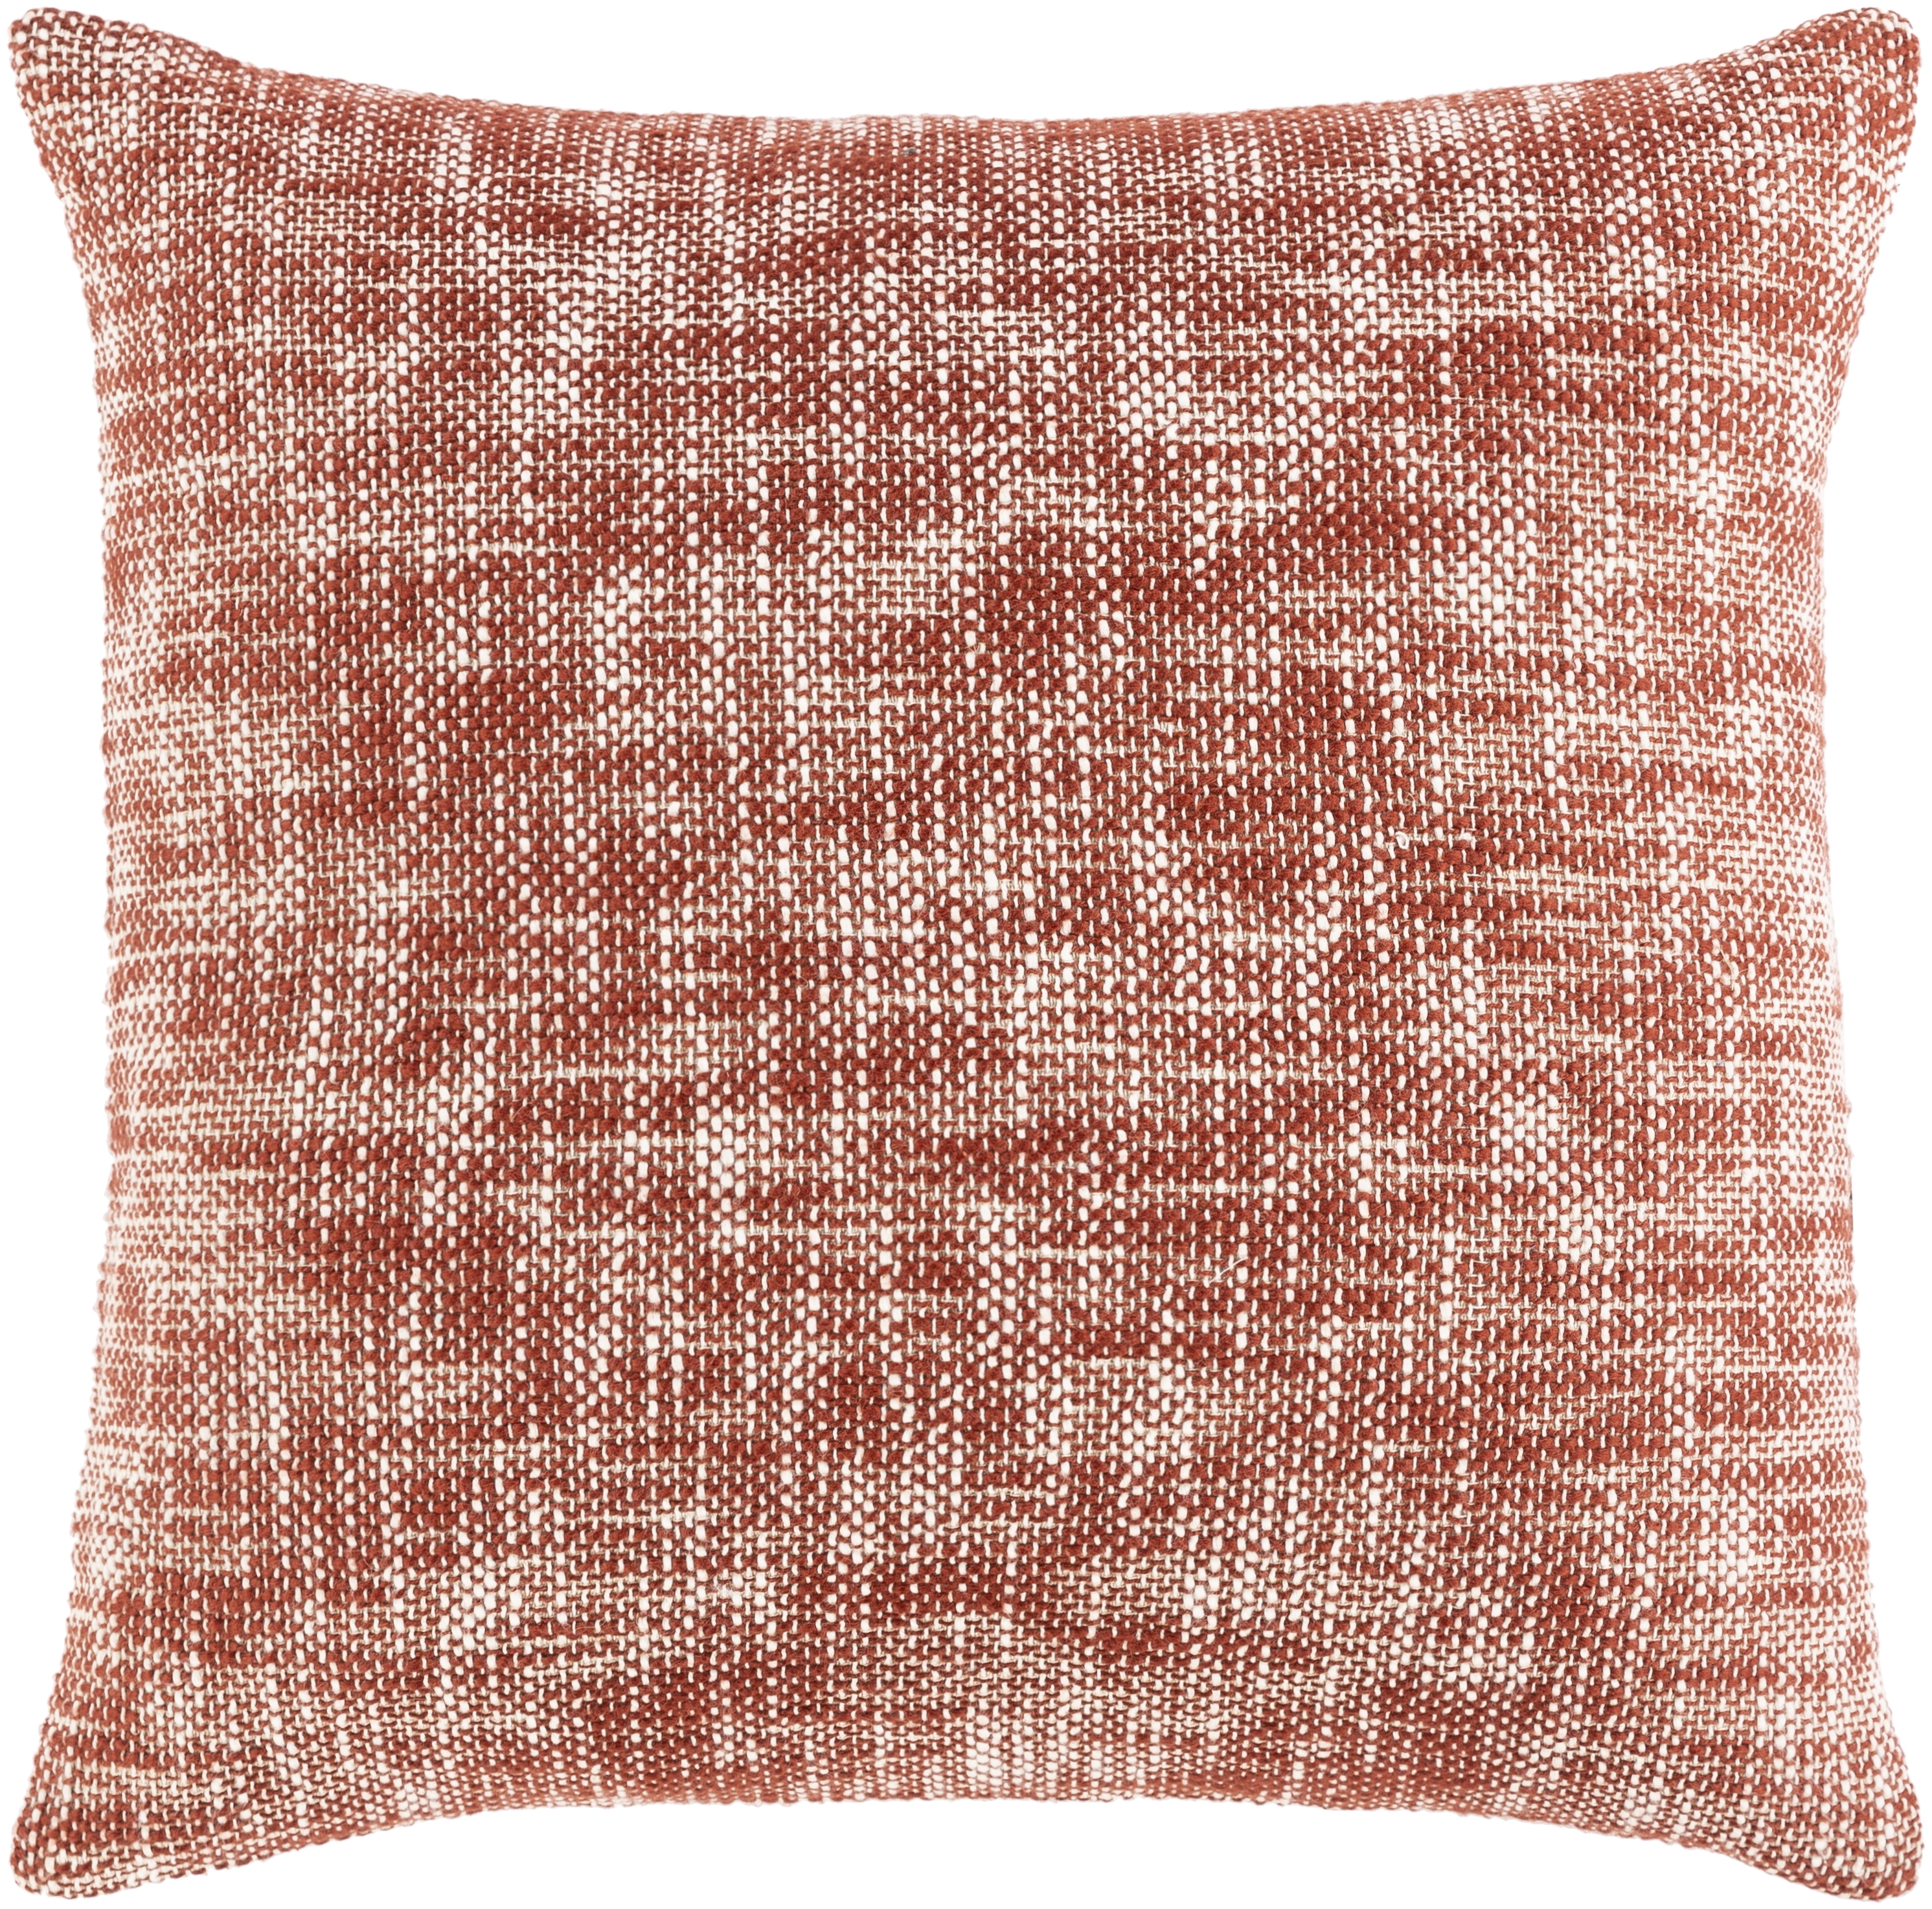 Suri Throw Pillow, 20" x 20", with poly insert - Image 0